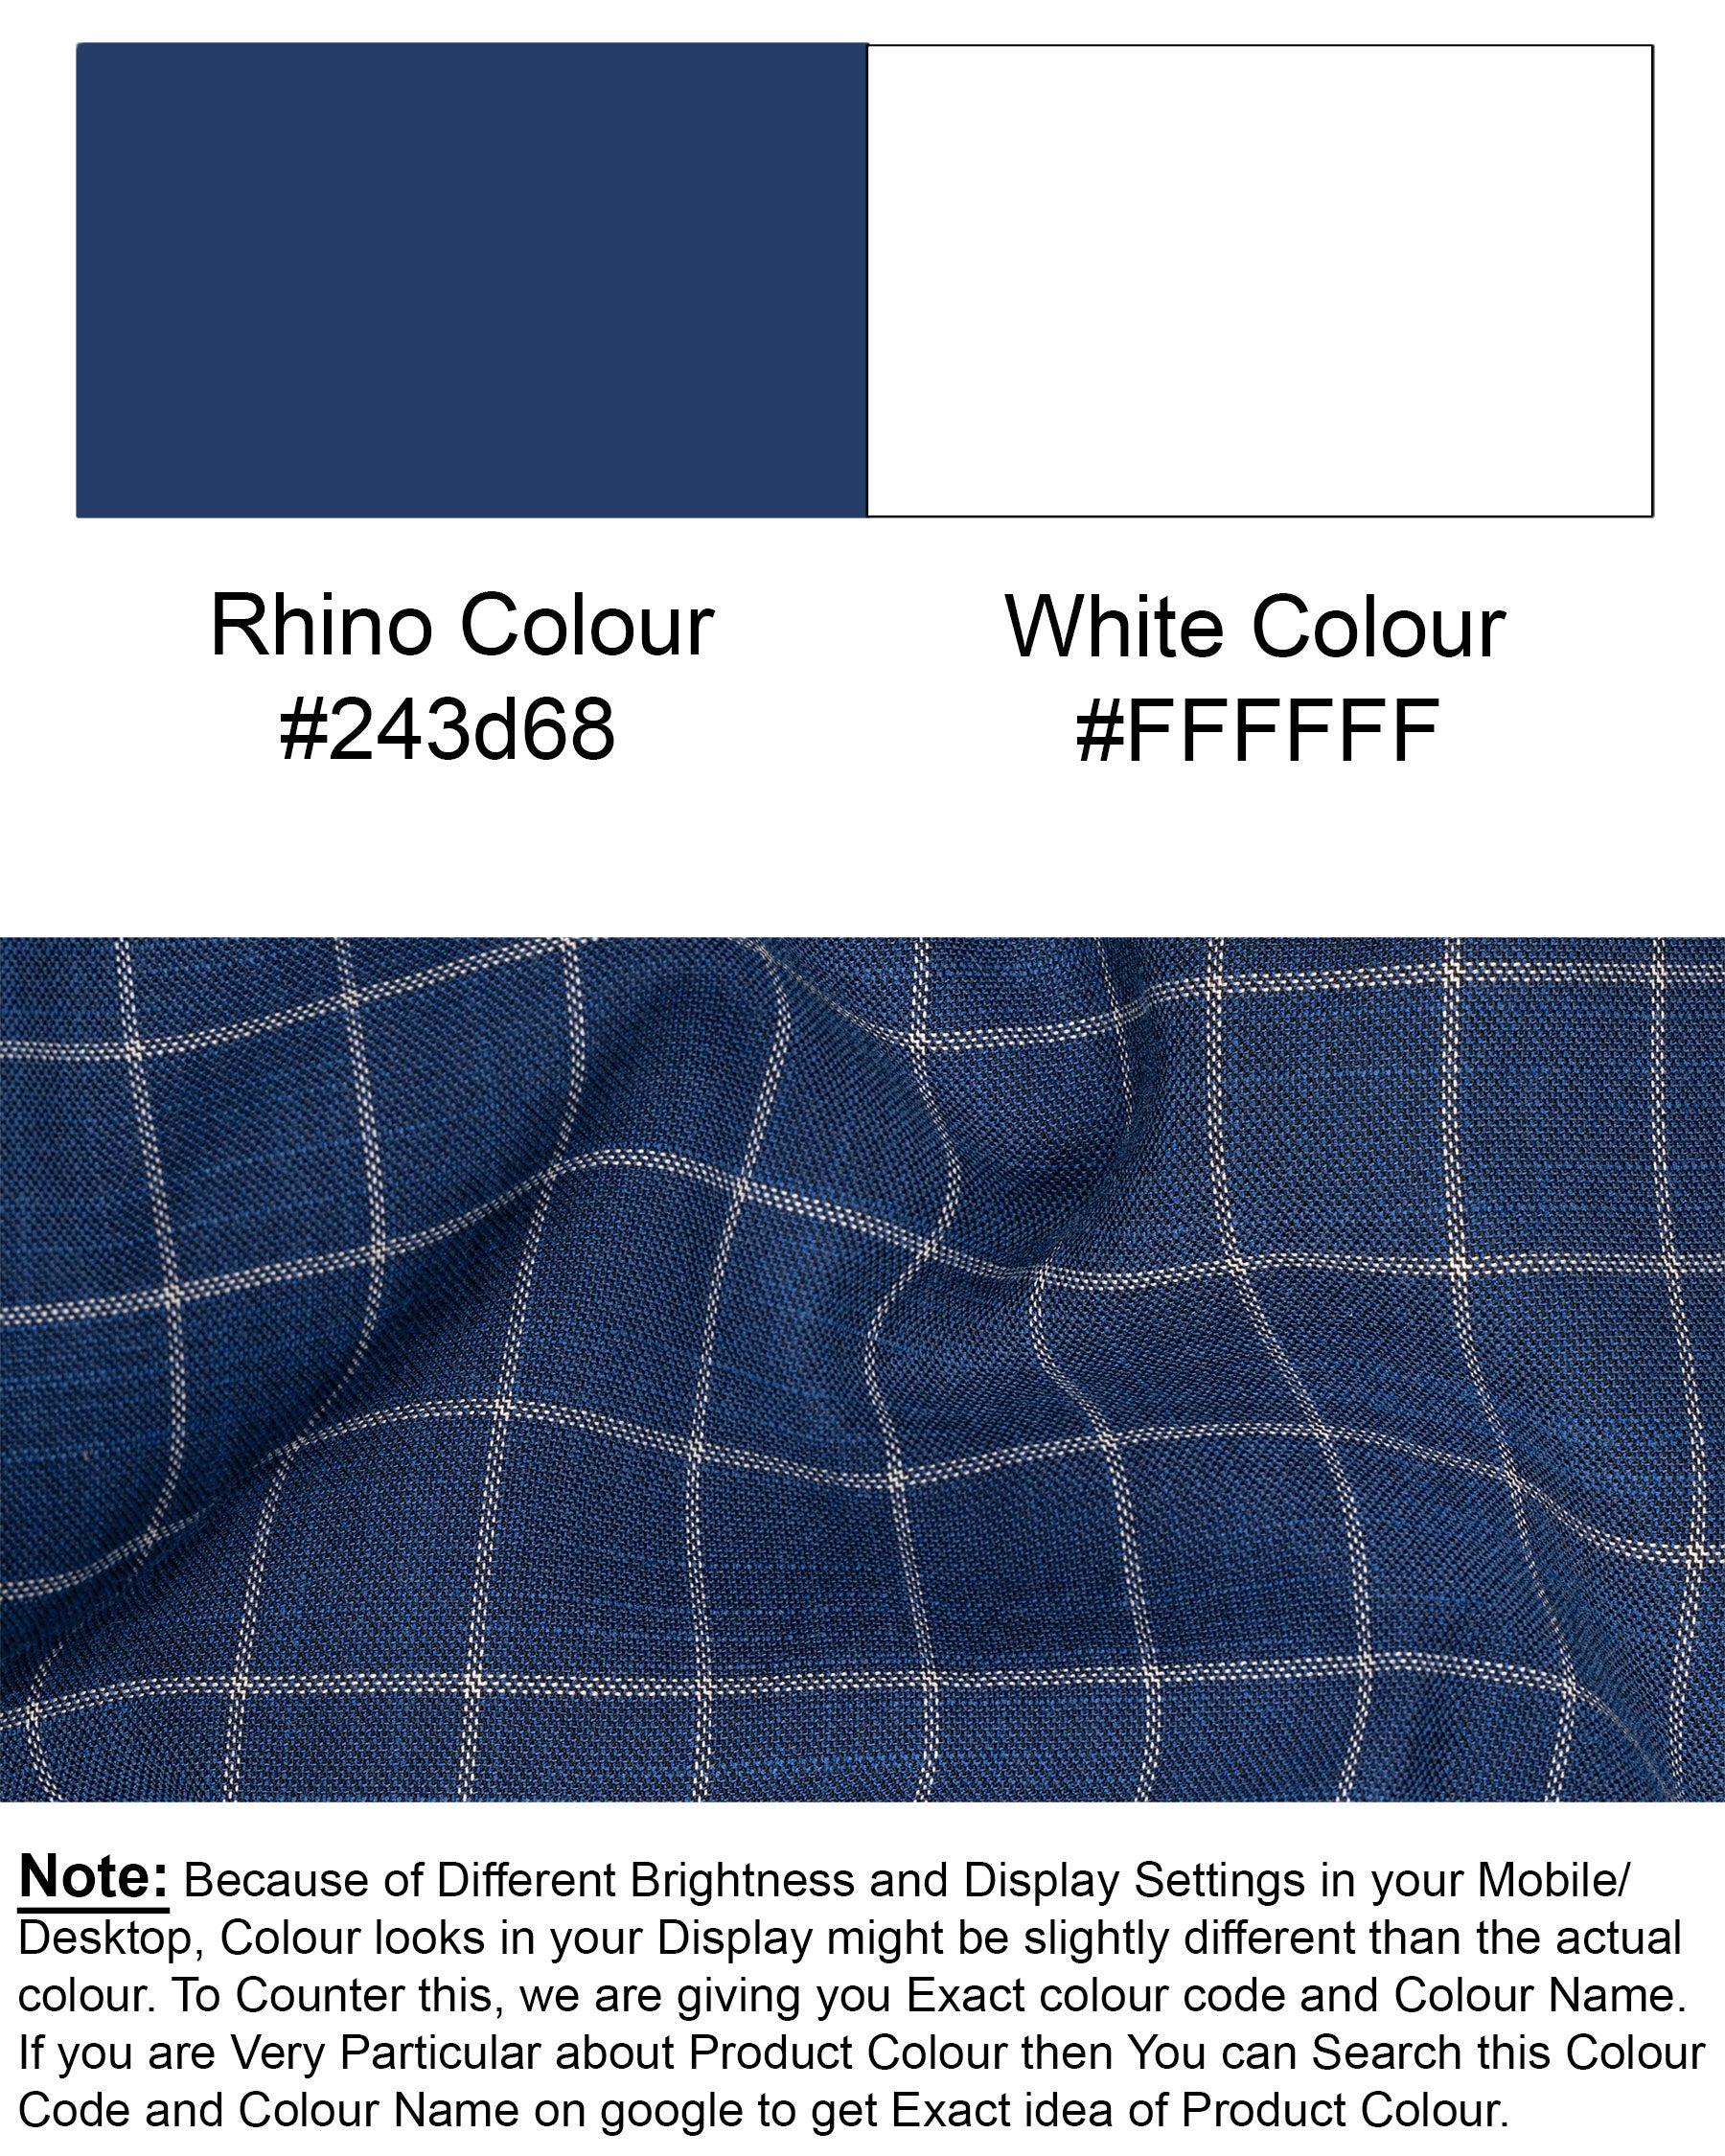 Rhino Blue Super fine Checkered Double Breasted Premium Cotton Blazer BL1622-DB-2B-36, BL1622-DB-2B-38, BL1622-DB-2B-40, BL1622-DB-2B-42, BL1622-DB-2B-44, BL1622-DB-2B-46, BL1622-DB-2B-48, BL1622-DB-2B-50, BL1622-DB-2B-52, BL1622-DB-2B-54, BL1622-DB-2B-56, BL1622-DB-2B-58, BL1622-DB-2B-60